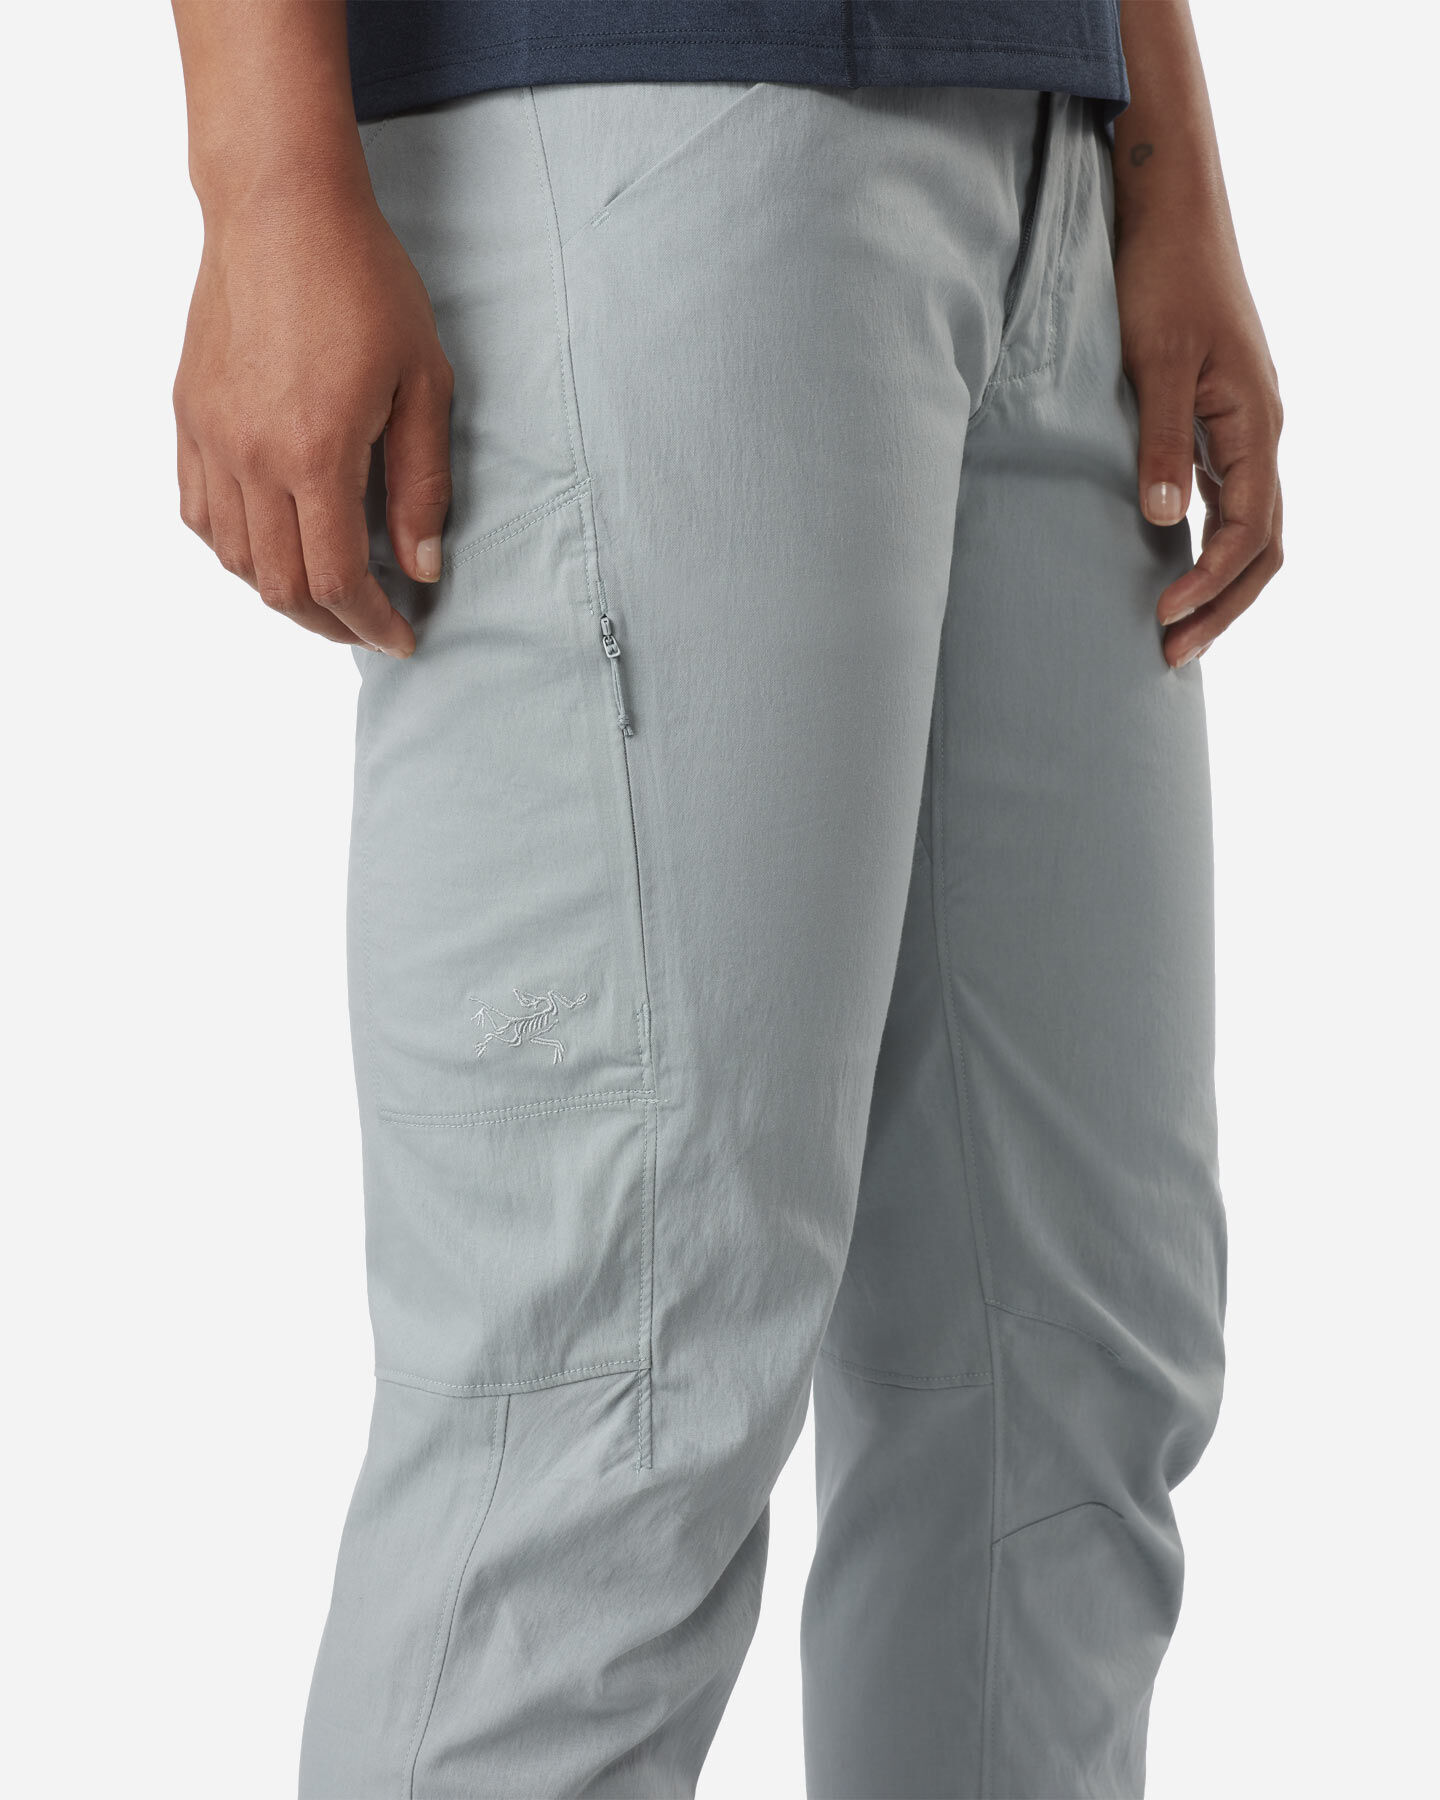  Pantalone outdoor ARC'TERYX KONSEAL W S4089775|1|2 scatto 4